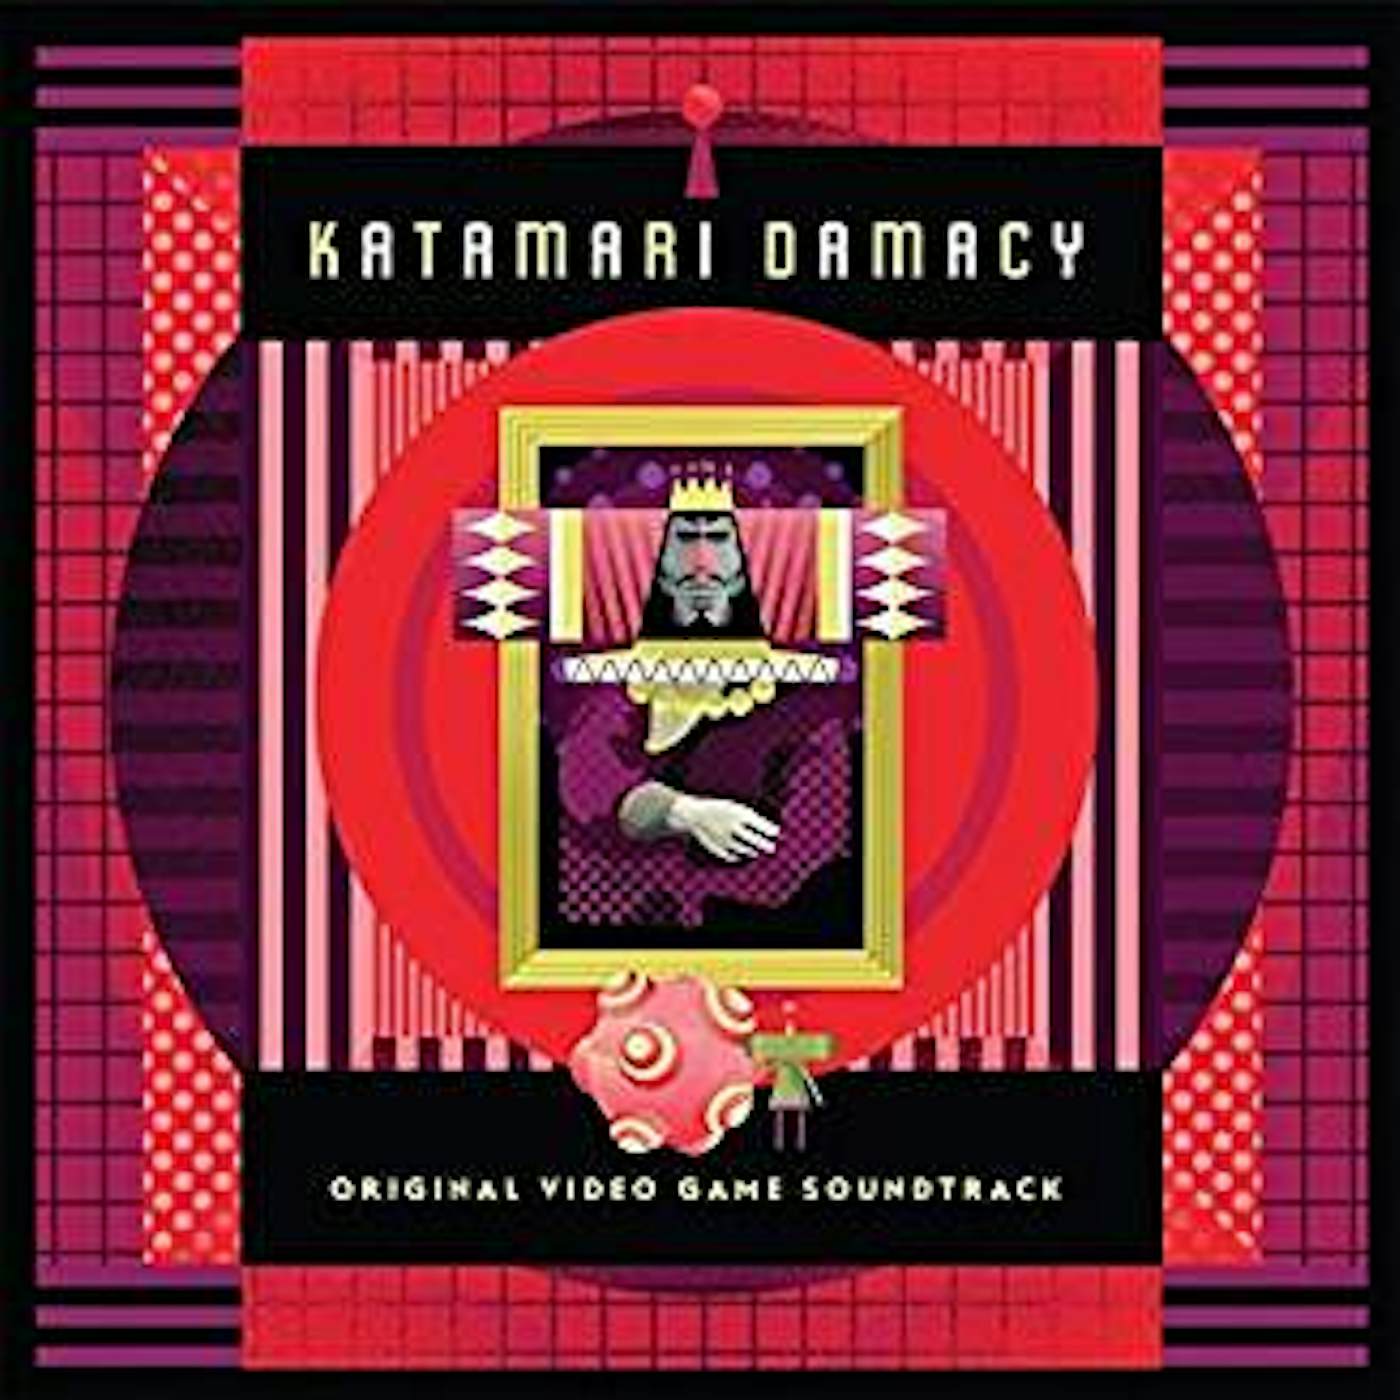 KATAMARI DAMACY (ORIGINAL VIDEO GAME SOUNDTRACK) Vinyl Record